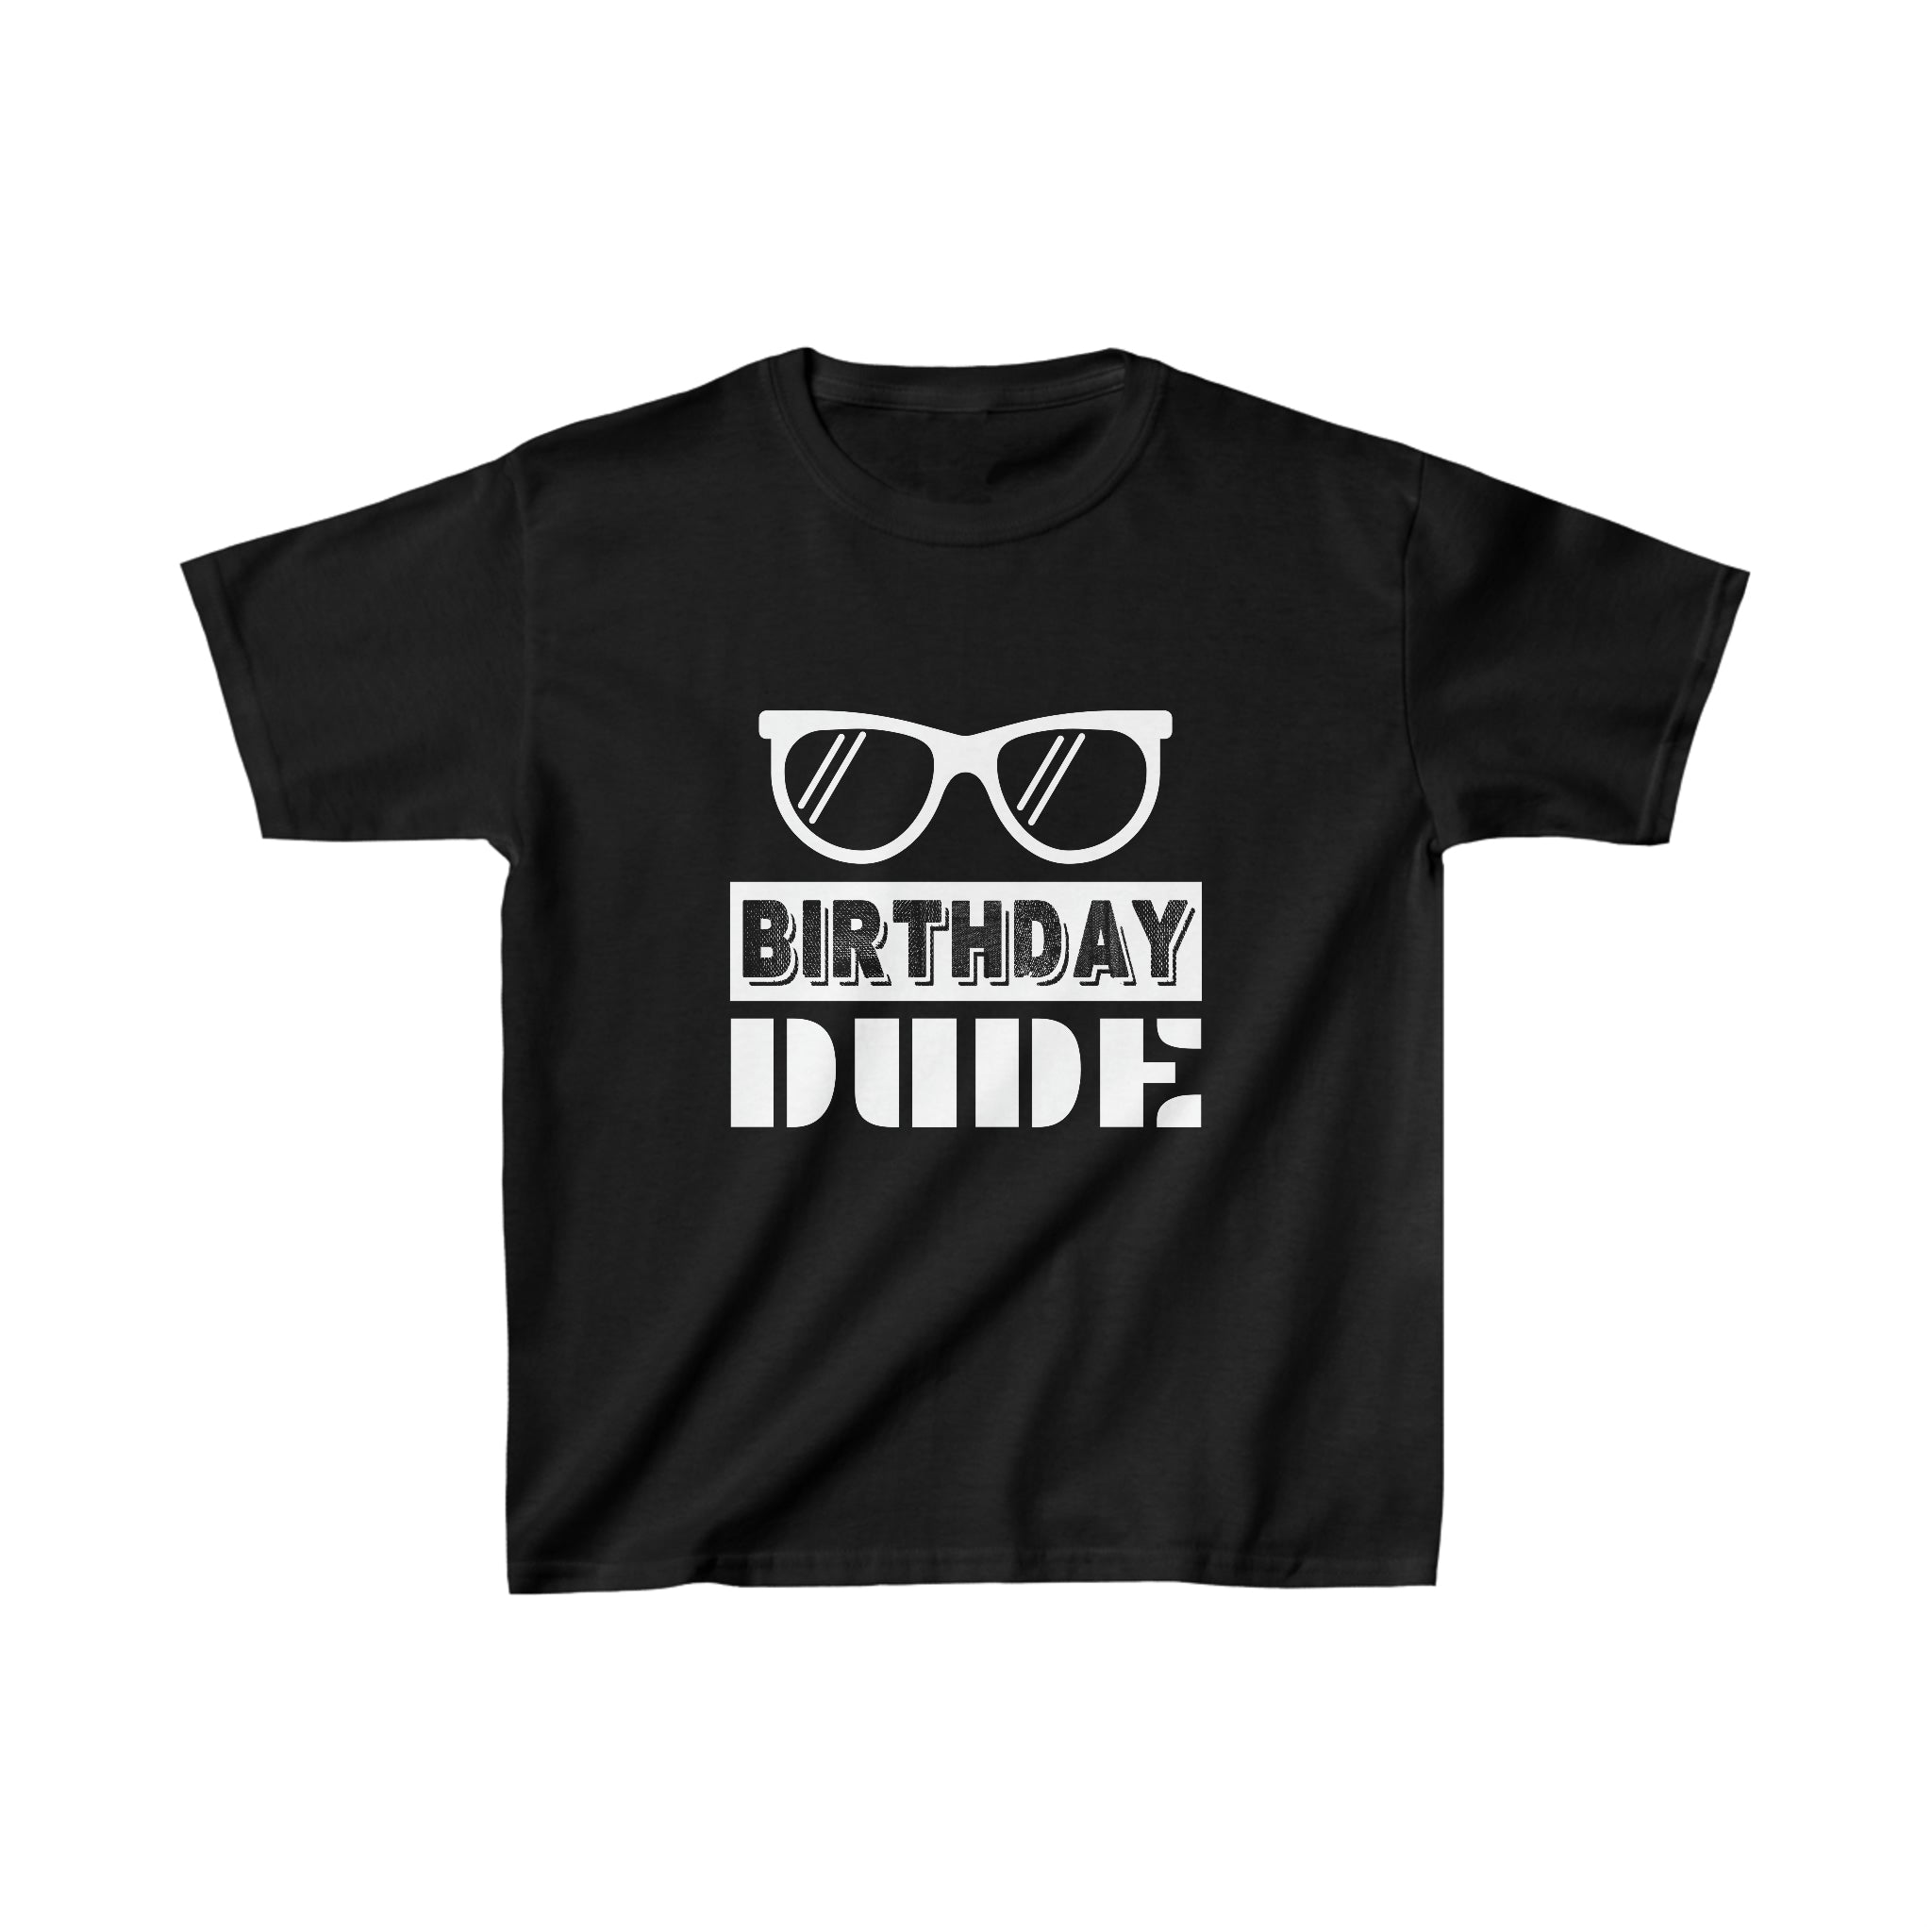 Birthday Dude Graphic Novelty Perfect Dude Merchandise Boys Boys Shirts